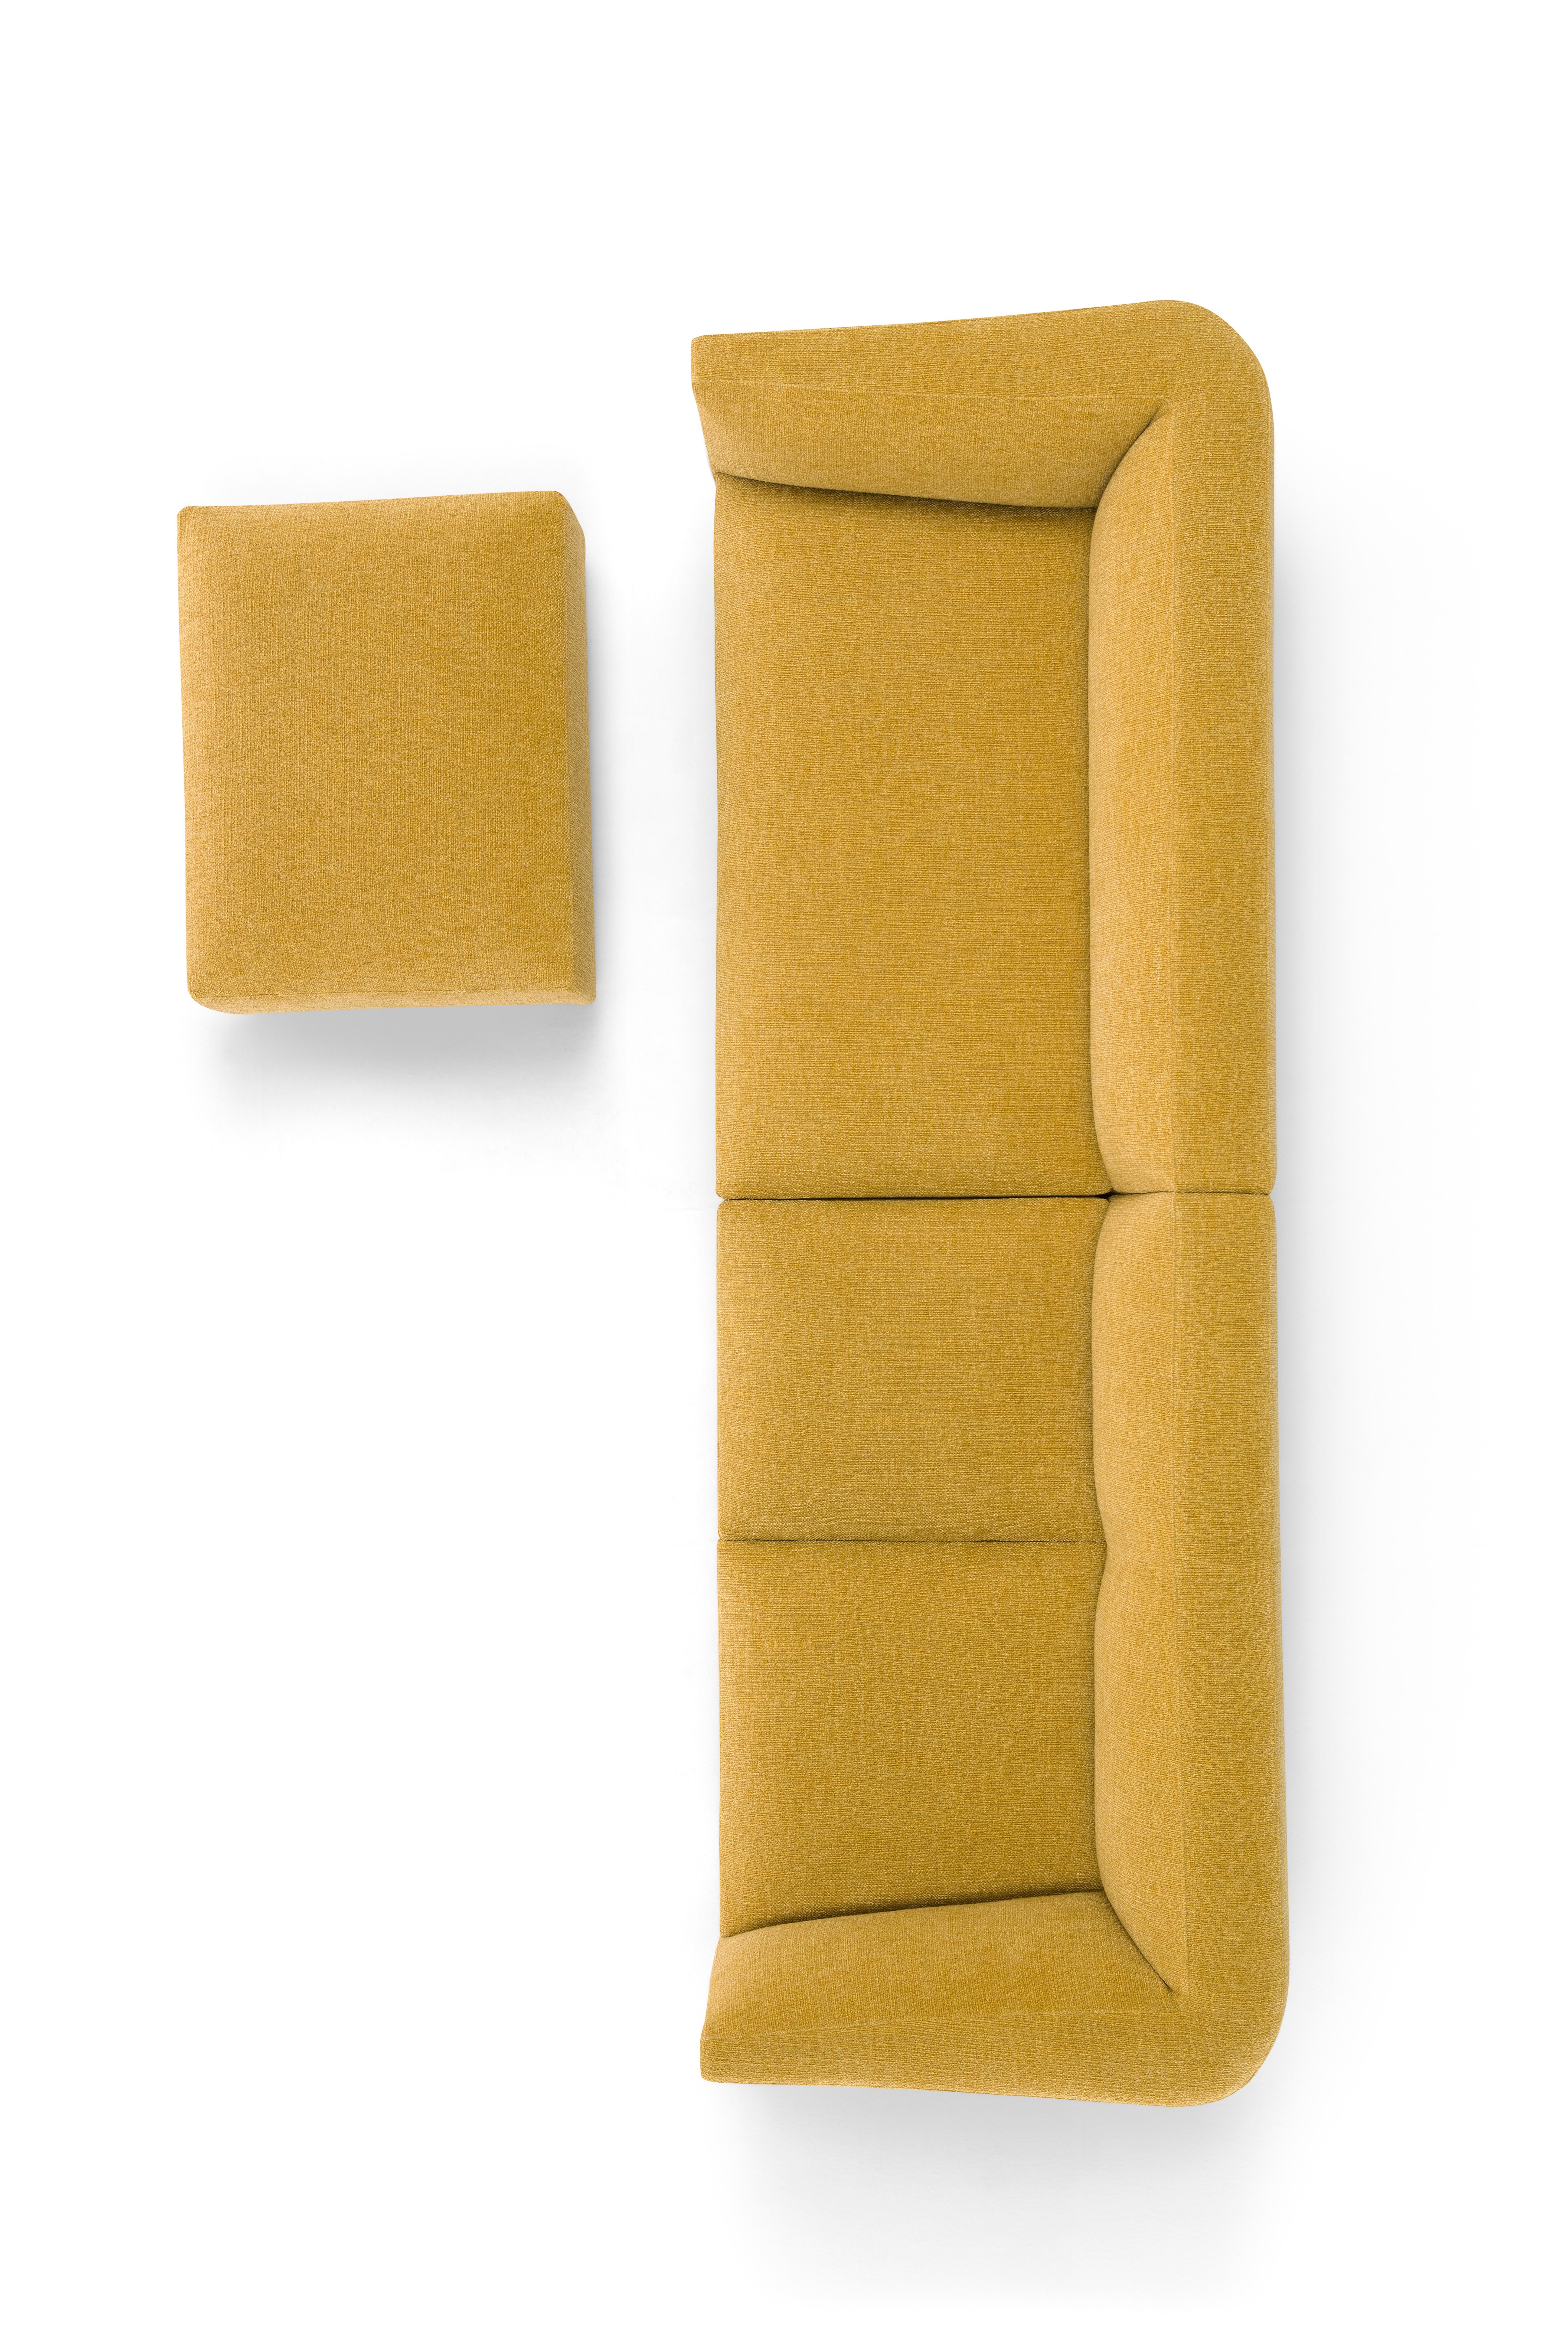 Contemporary Sofa 'Panis' by Amura Lab, Setup 215l + 216, Siena 06 For Sale 10